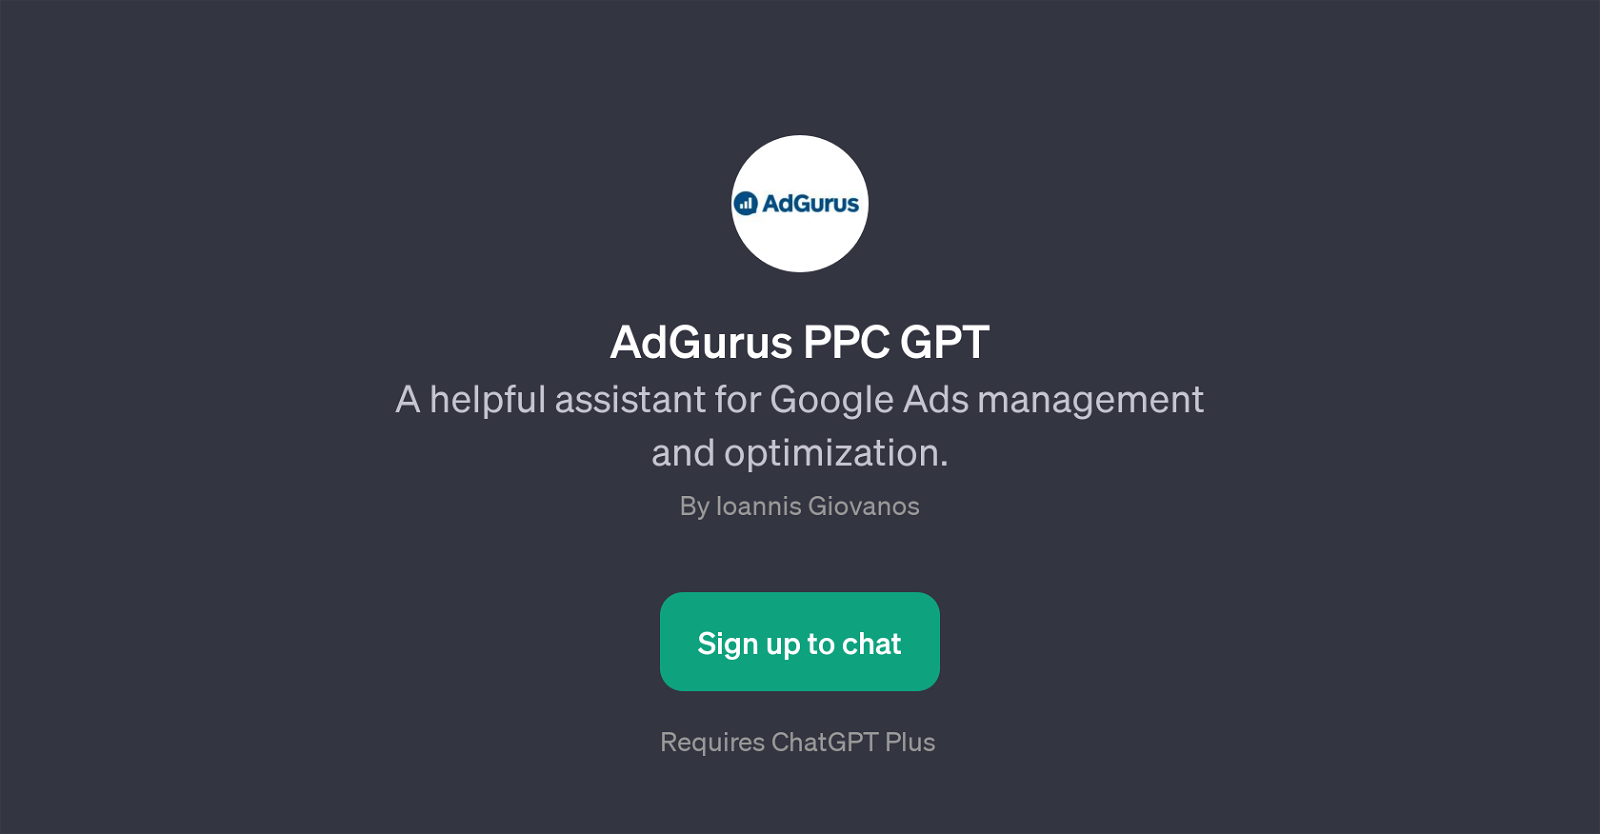 AdGurus PPC GPT website